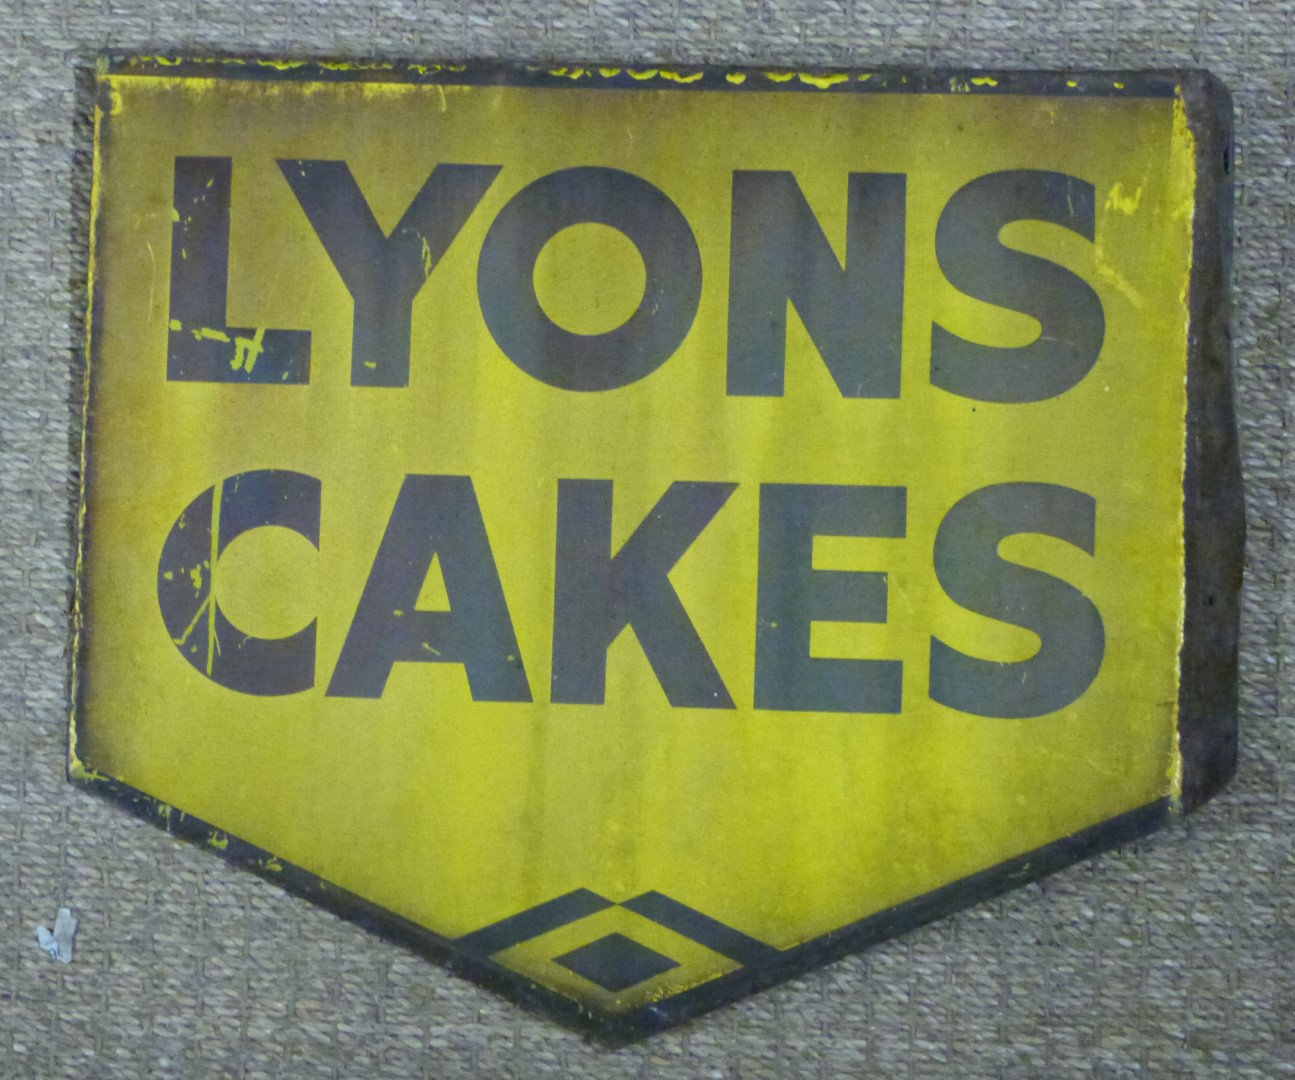 Lyons Cakes double sided vintage enamel advertising sign, 39.5 x 44cm - Image 3 of 3